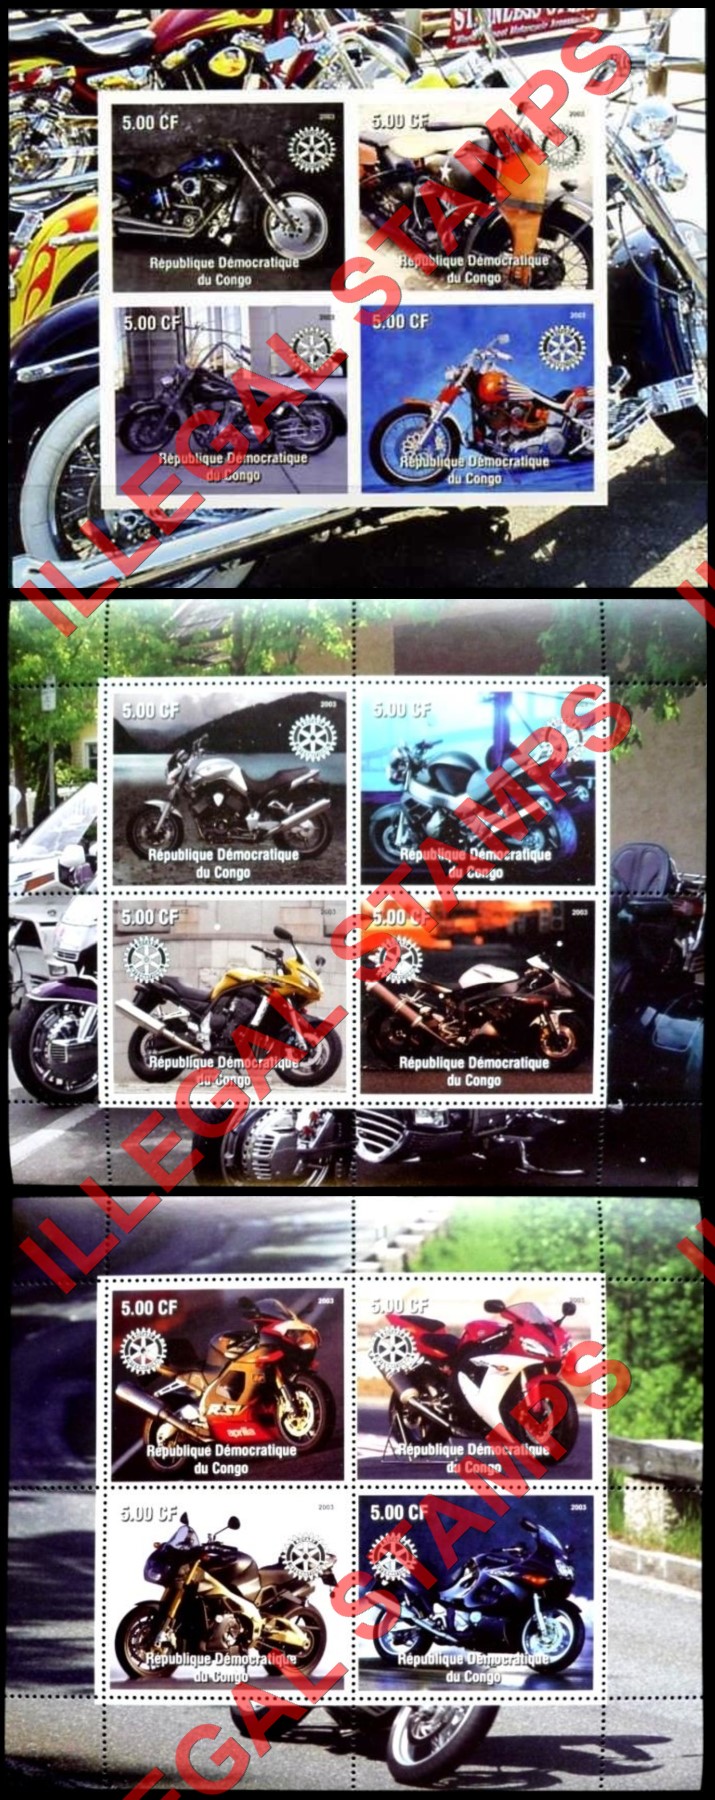 Congo Democratic Republic 2003 Motorcycles Illegal Stamp Souvenir Sheets of 4